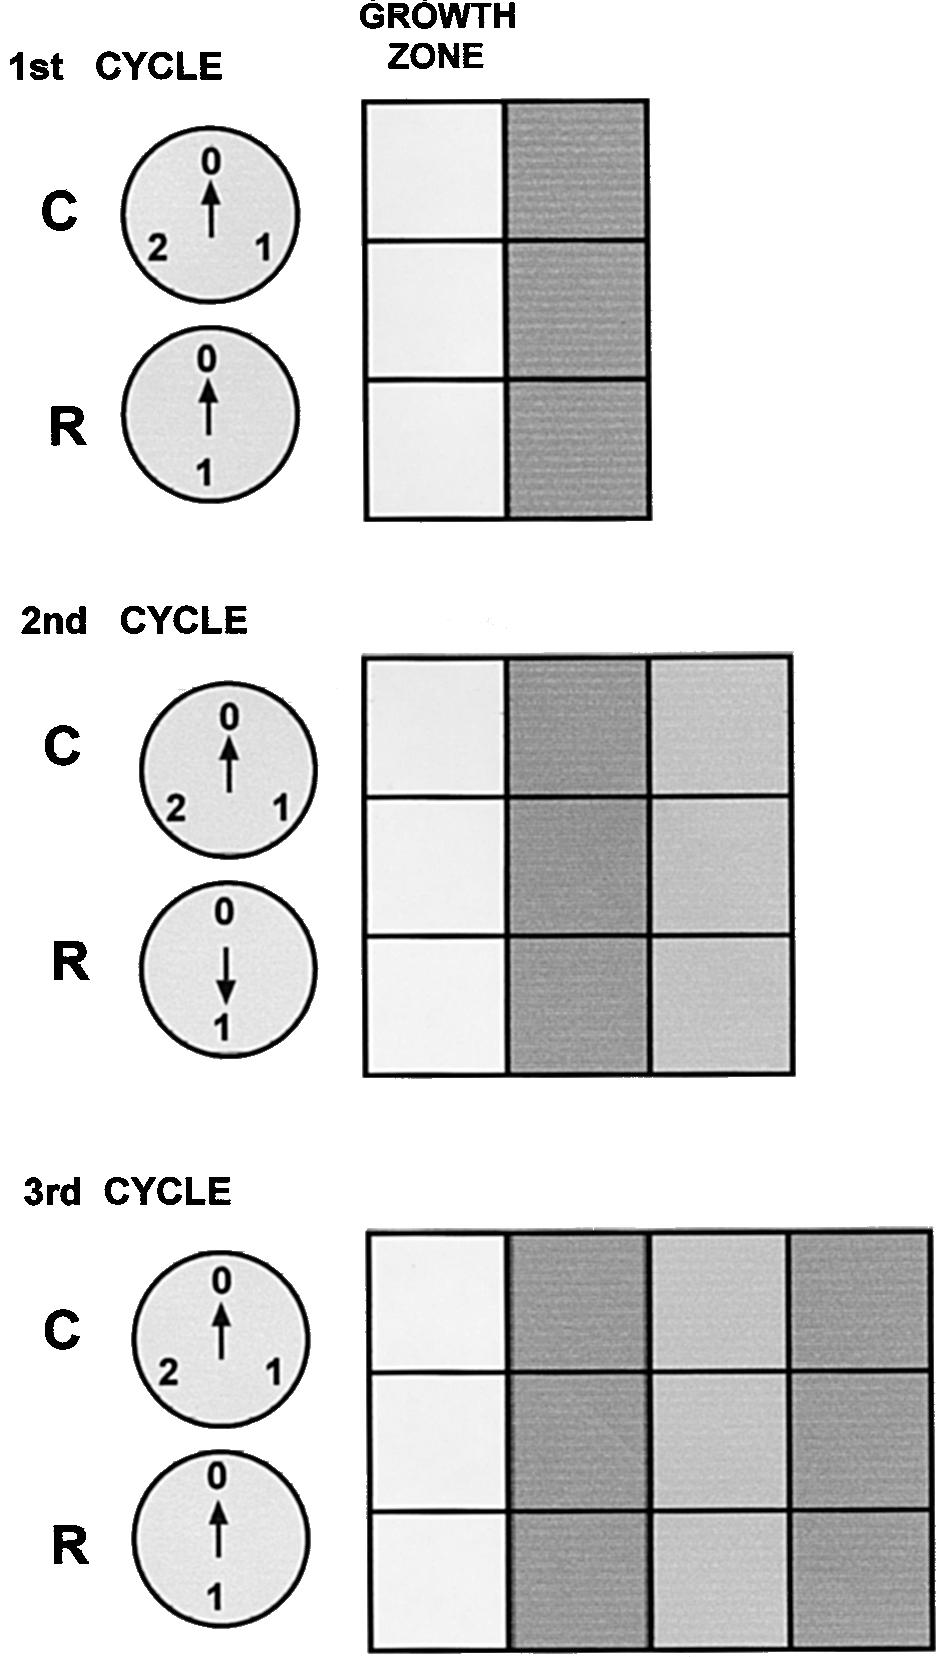 Salazar-Ciudad et al. Evolution of segmentation mechanisms 99 Fig. 2.